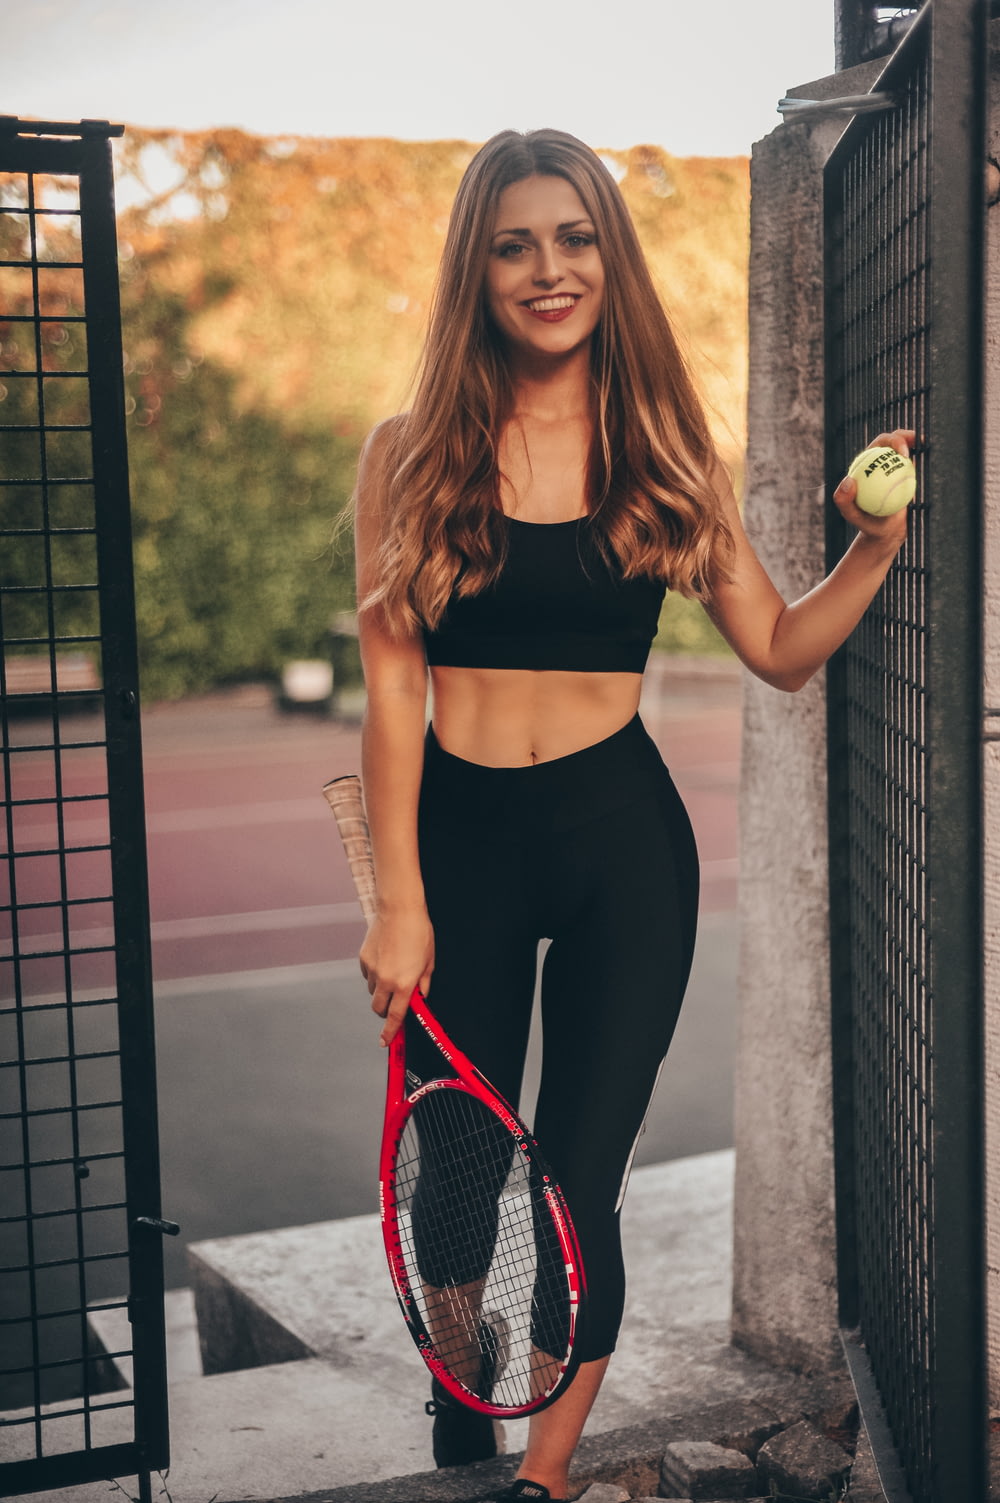 smiling woman wearing black sports bra and black leggings holding red tennis racket and ball standing beside black metal gate